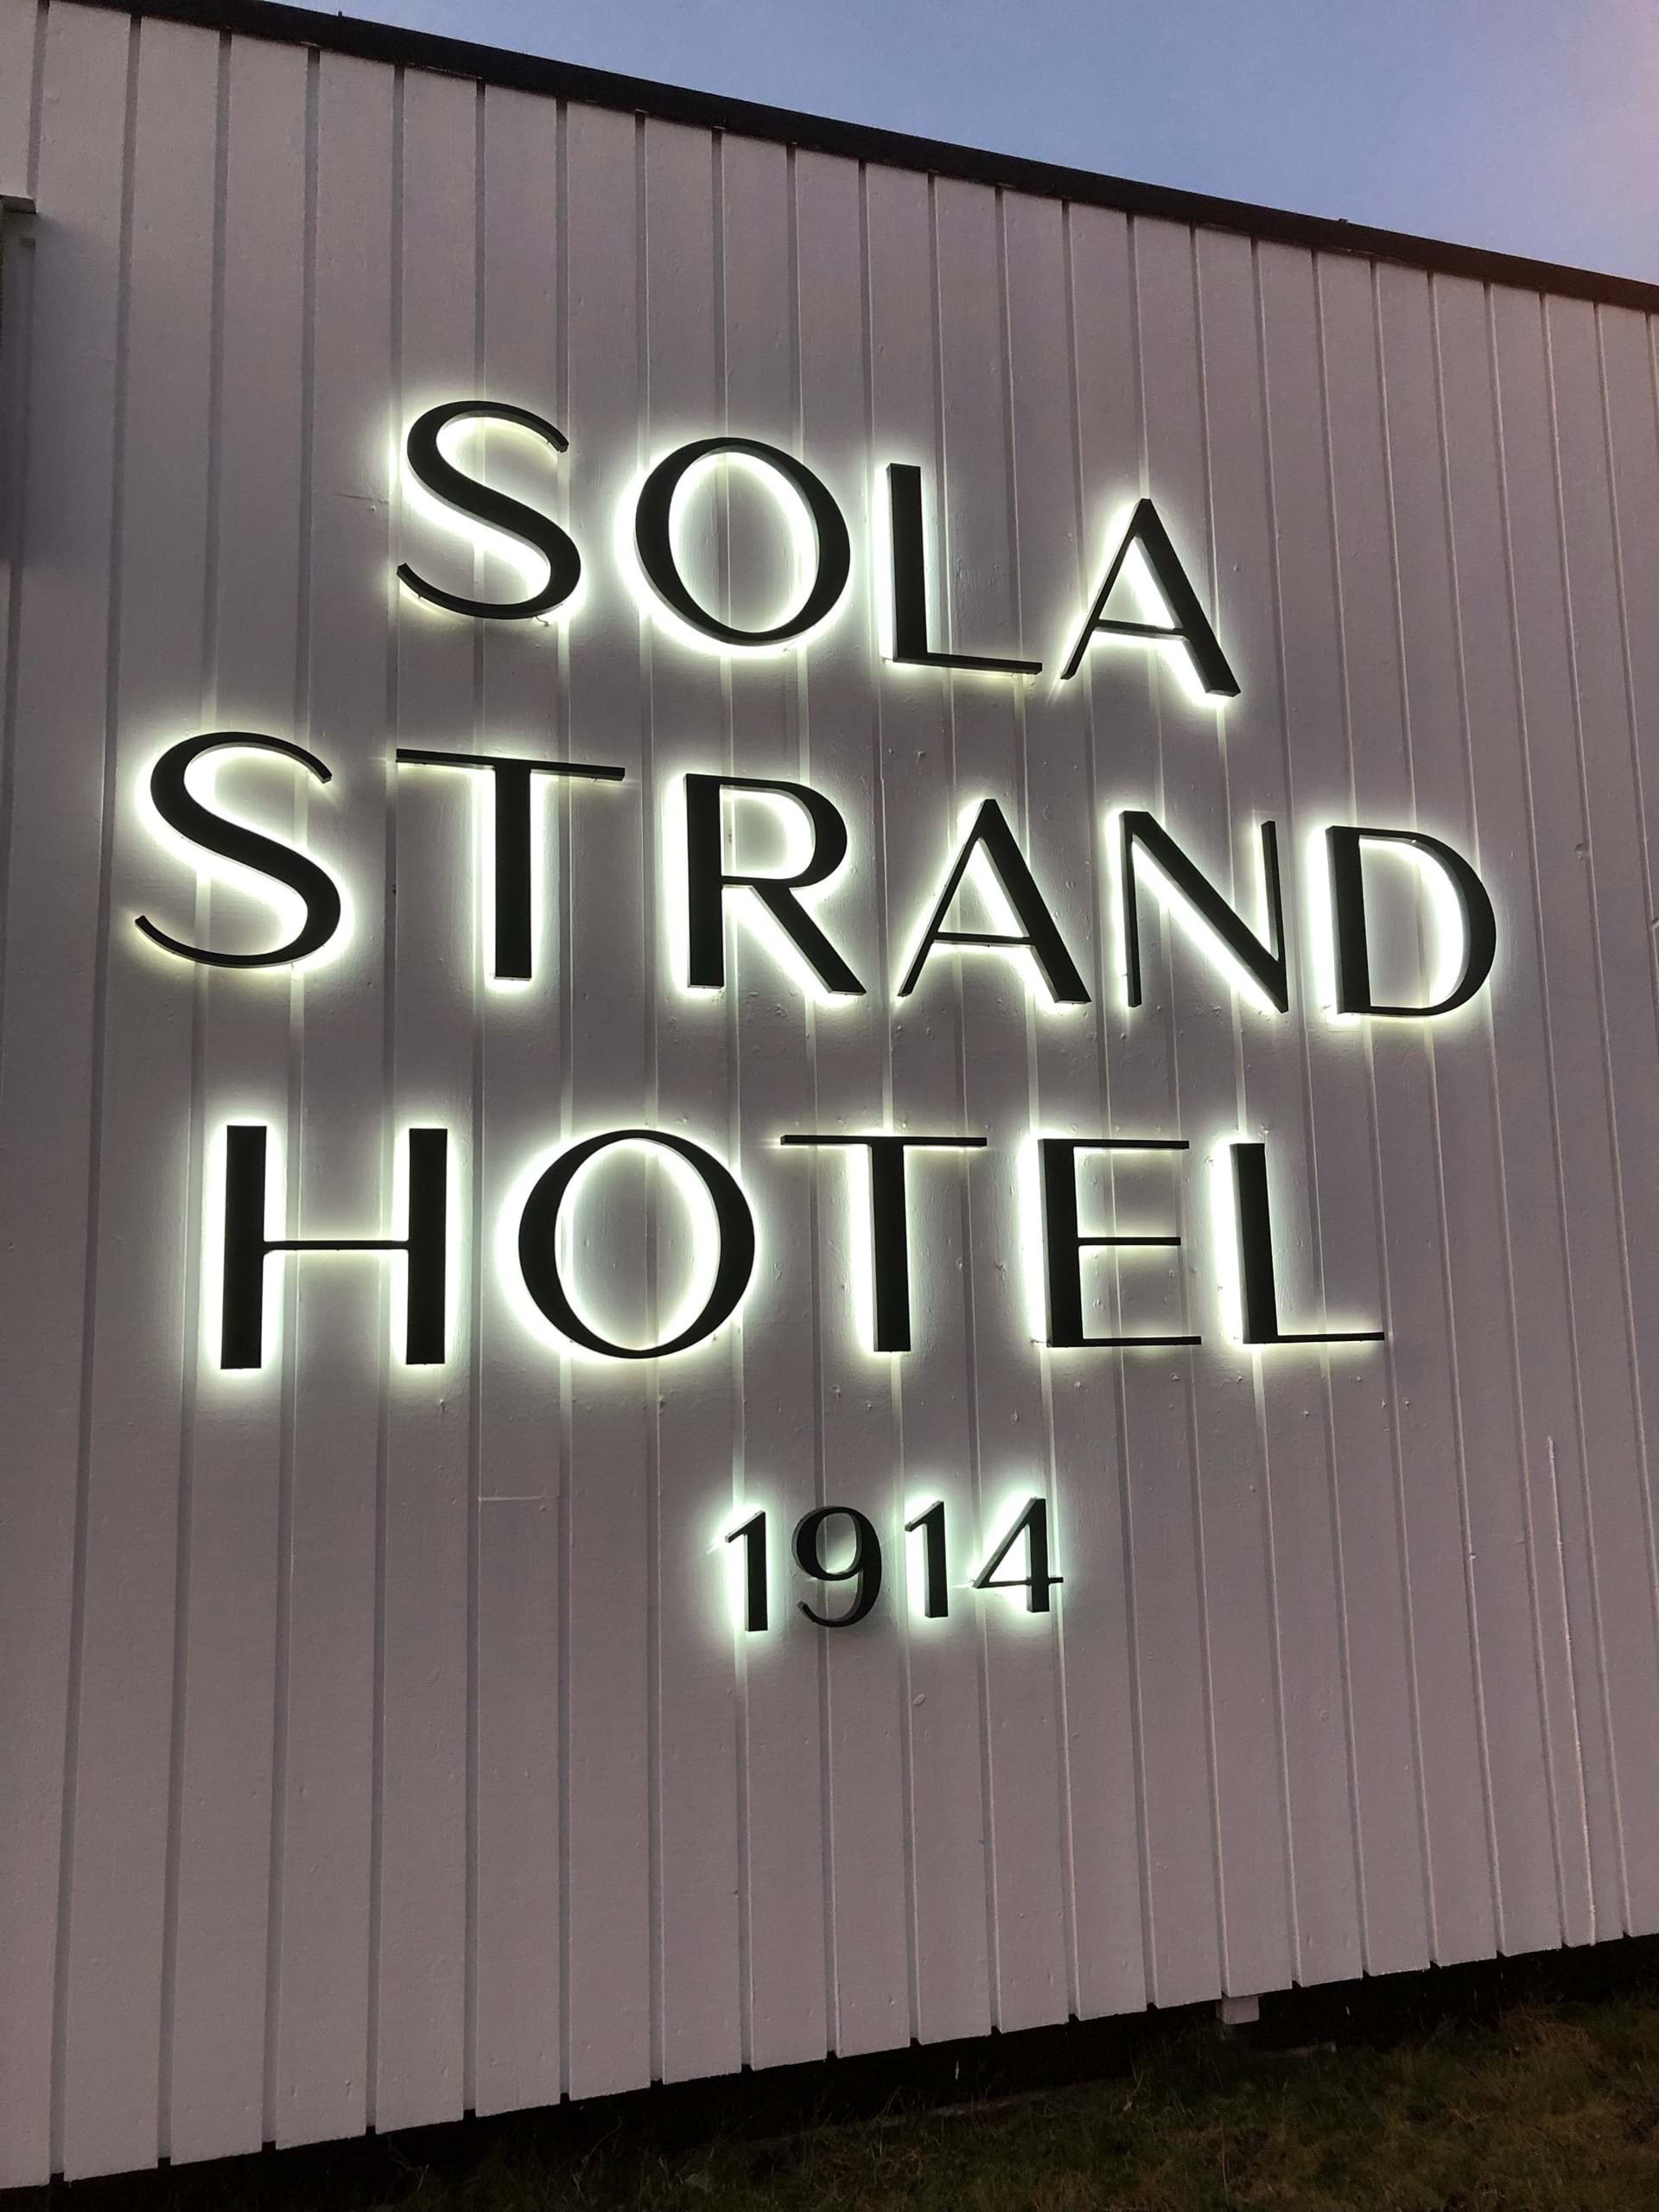 Sola Strand hotell, foto Heidunn S. Nordtveit